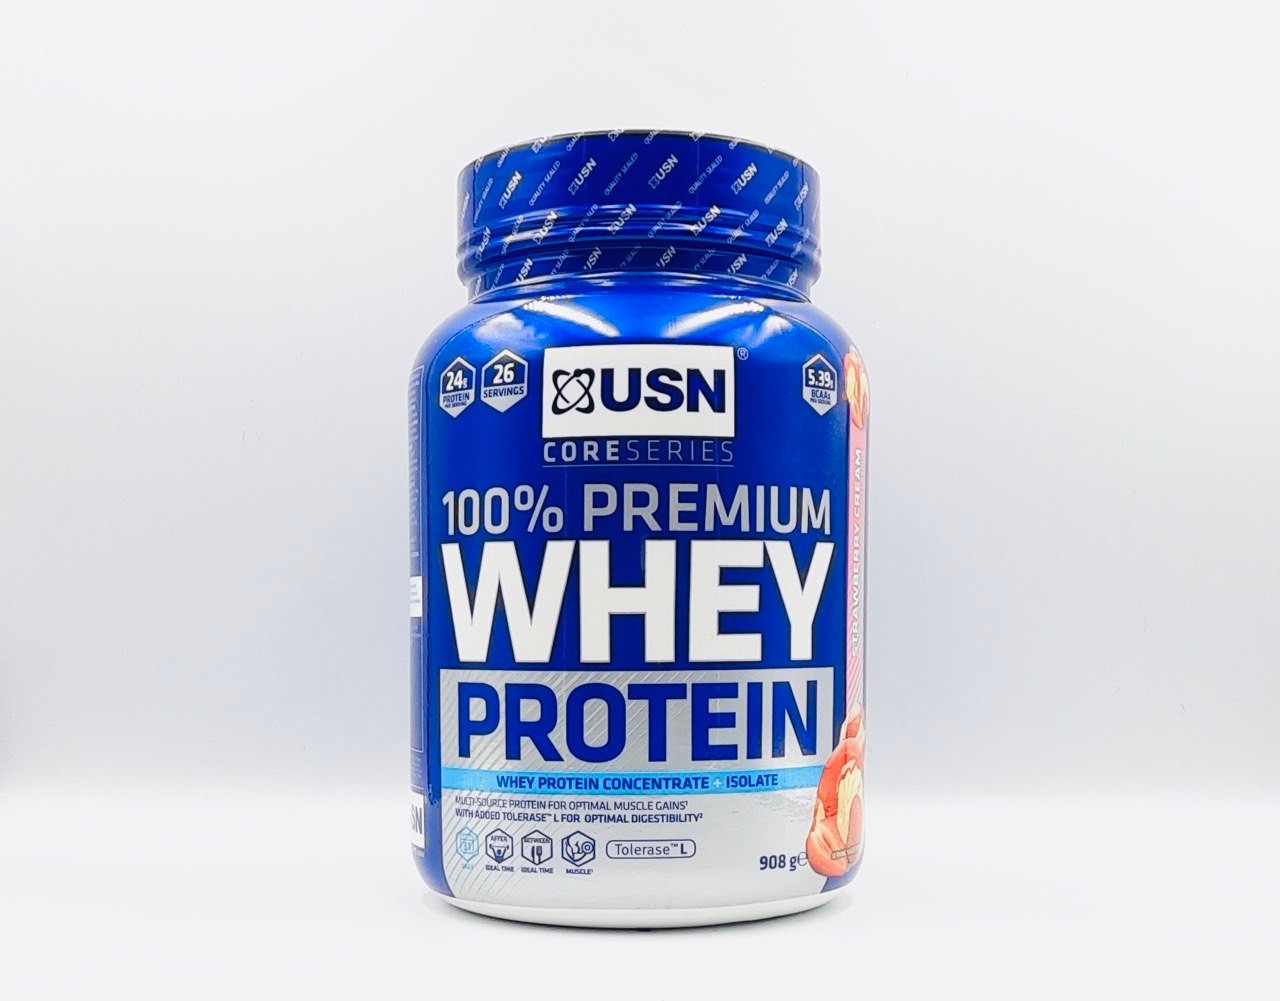 Usn протеин купить. USN 100%Whey Protein (2.28kg.). USN Blue Lab Whey Premium Protein (908 гр) шоколад. Изолят USN. Гейнер USN.